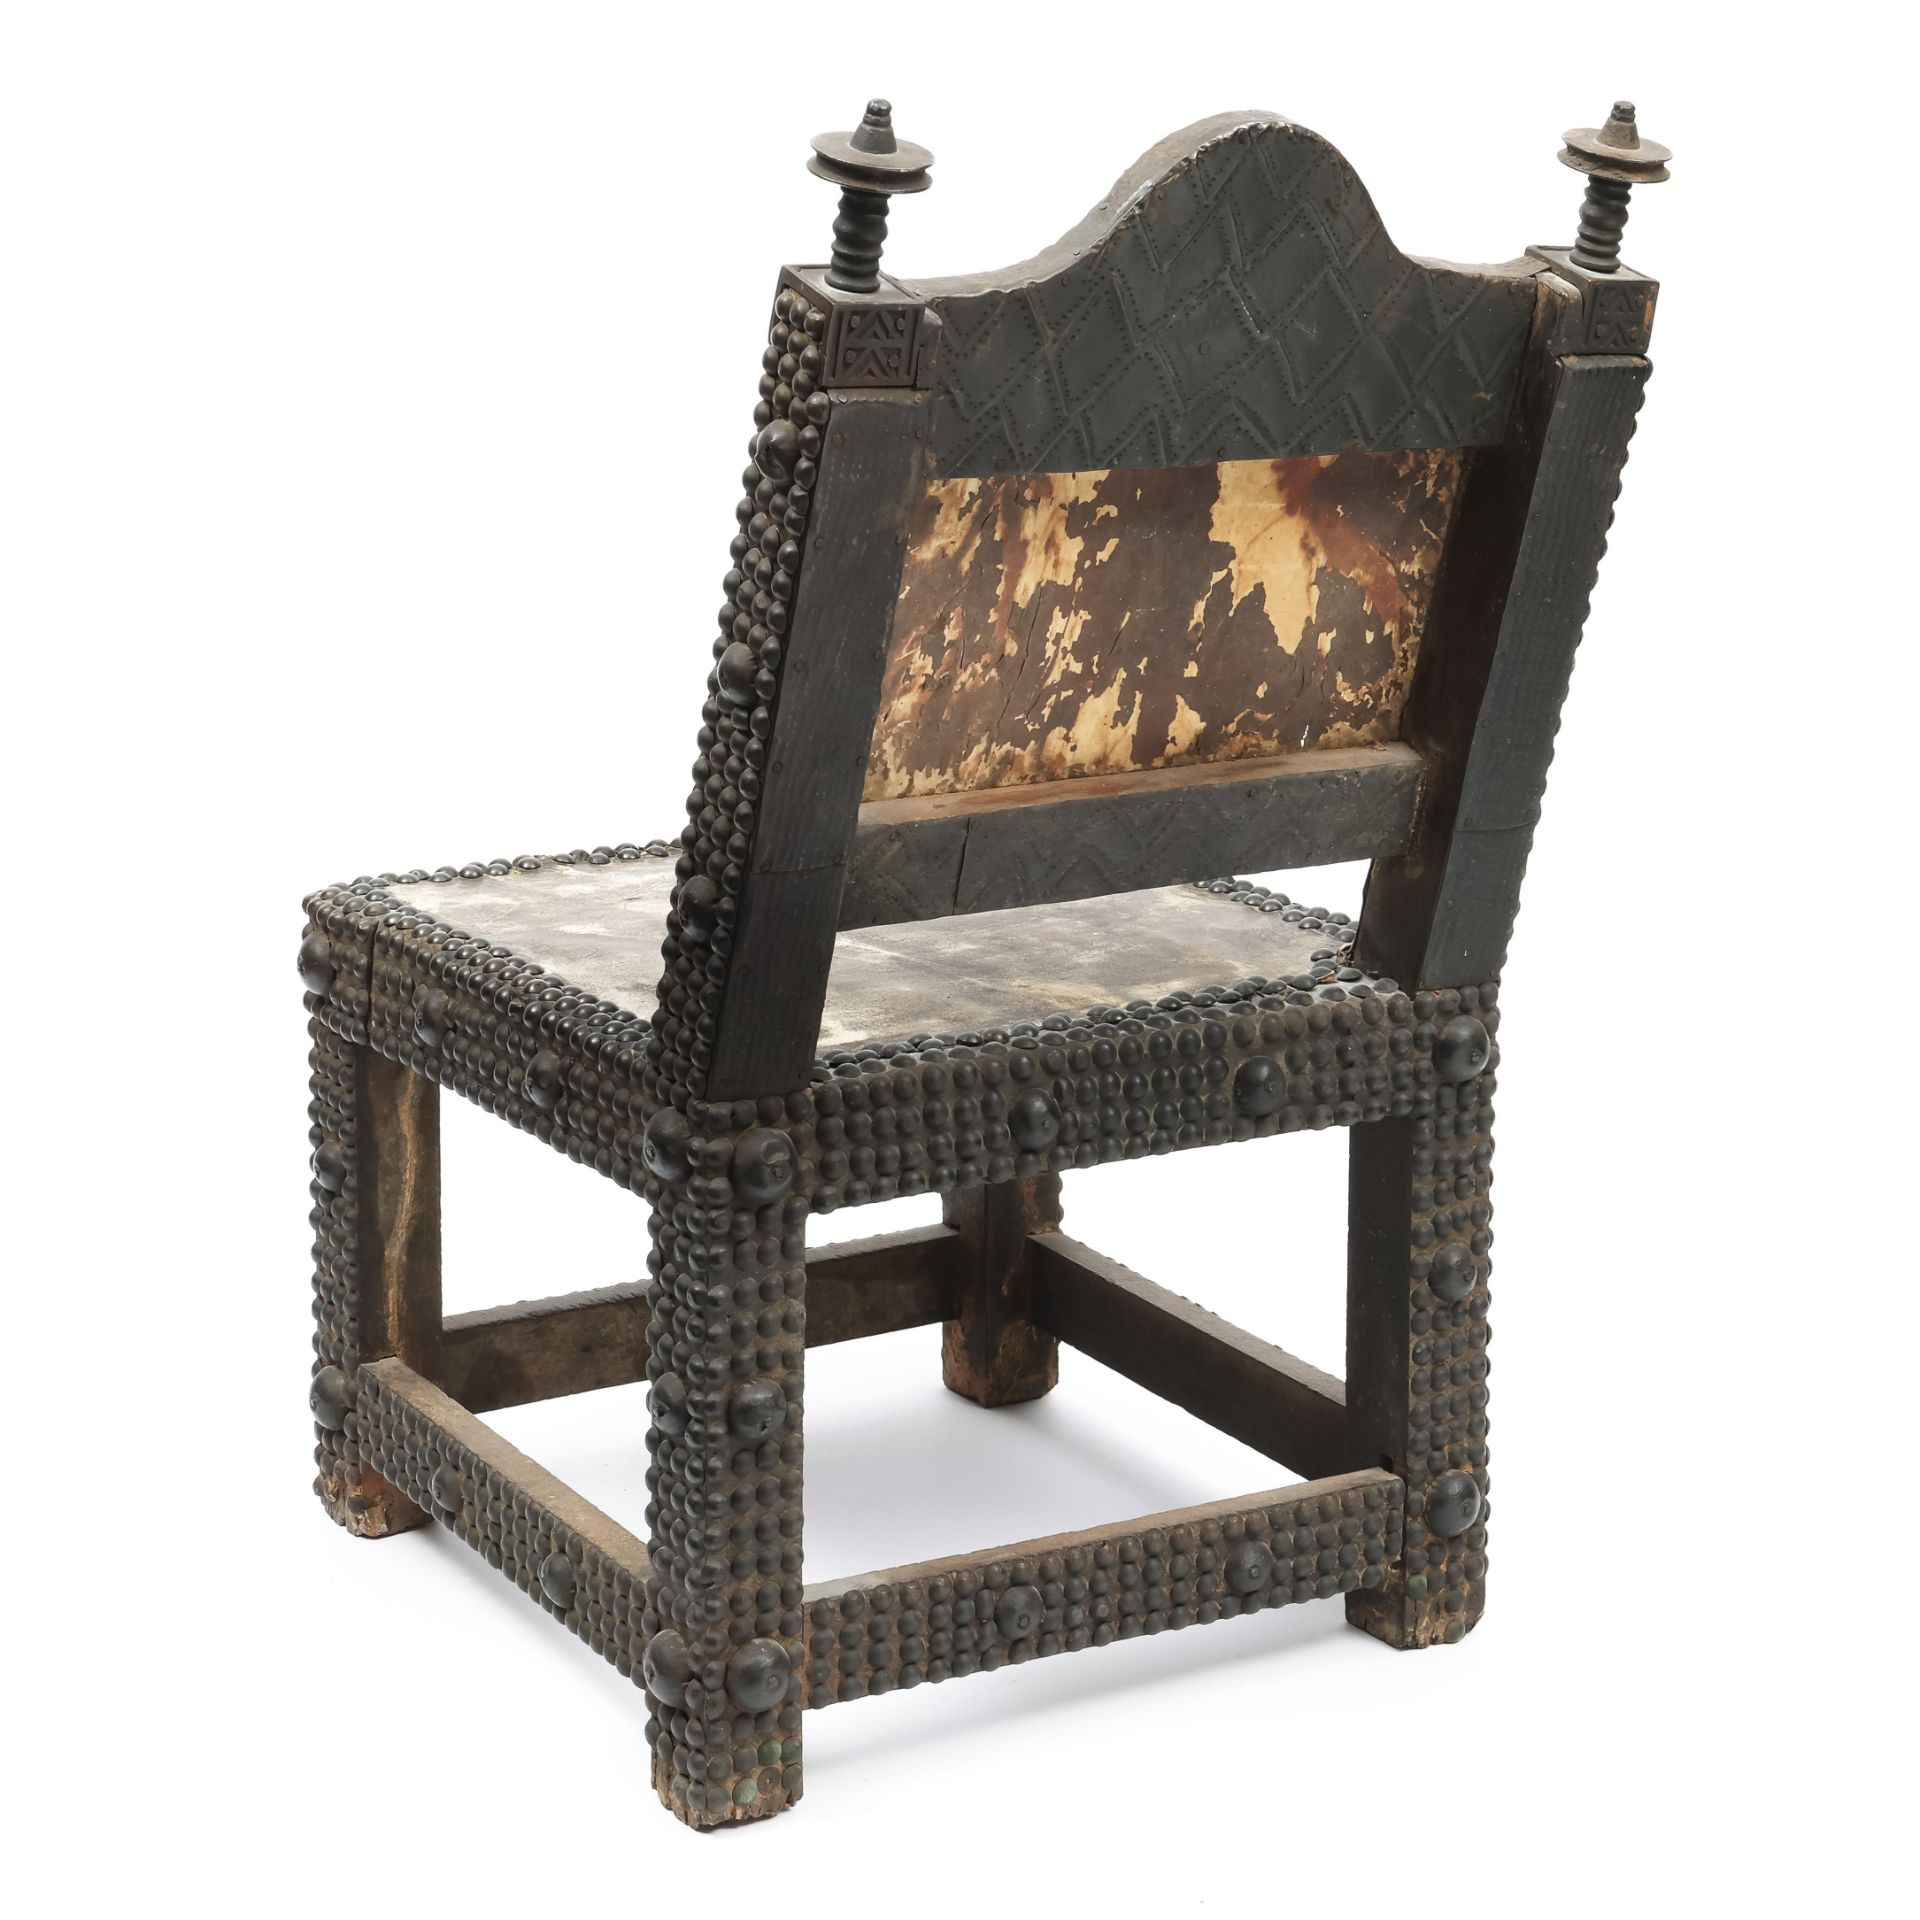 Ghana, Ashanti, a small chief's chair - Image 2 of 2